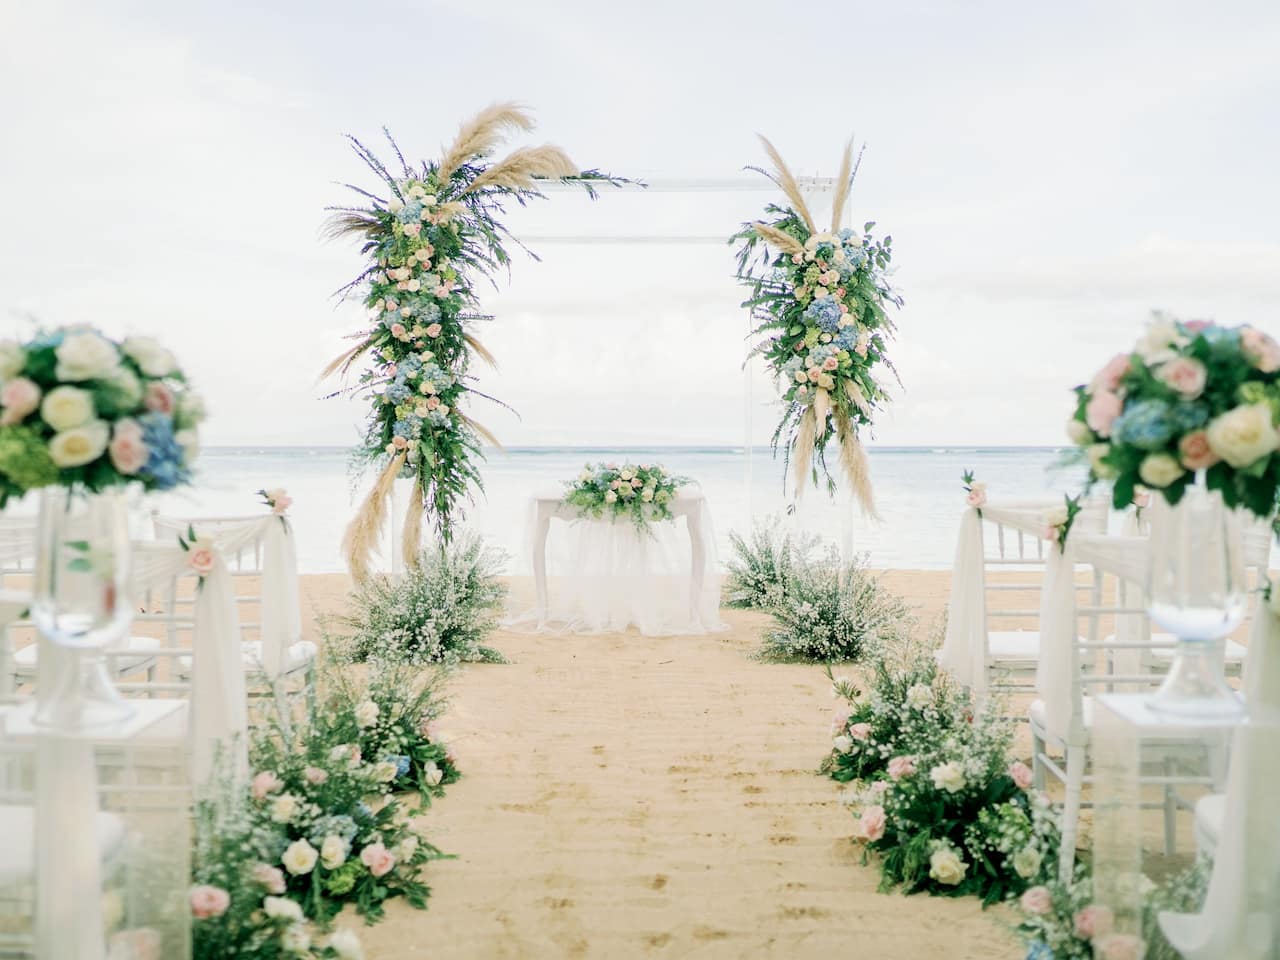 Wedding Locations & Beachfront Receptions from The Hyatt Regency Bali, Sanur Bali